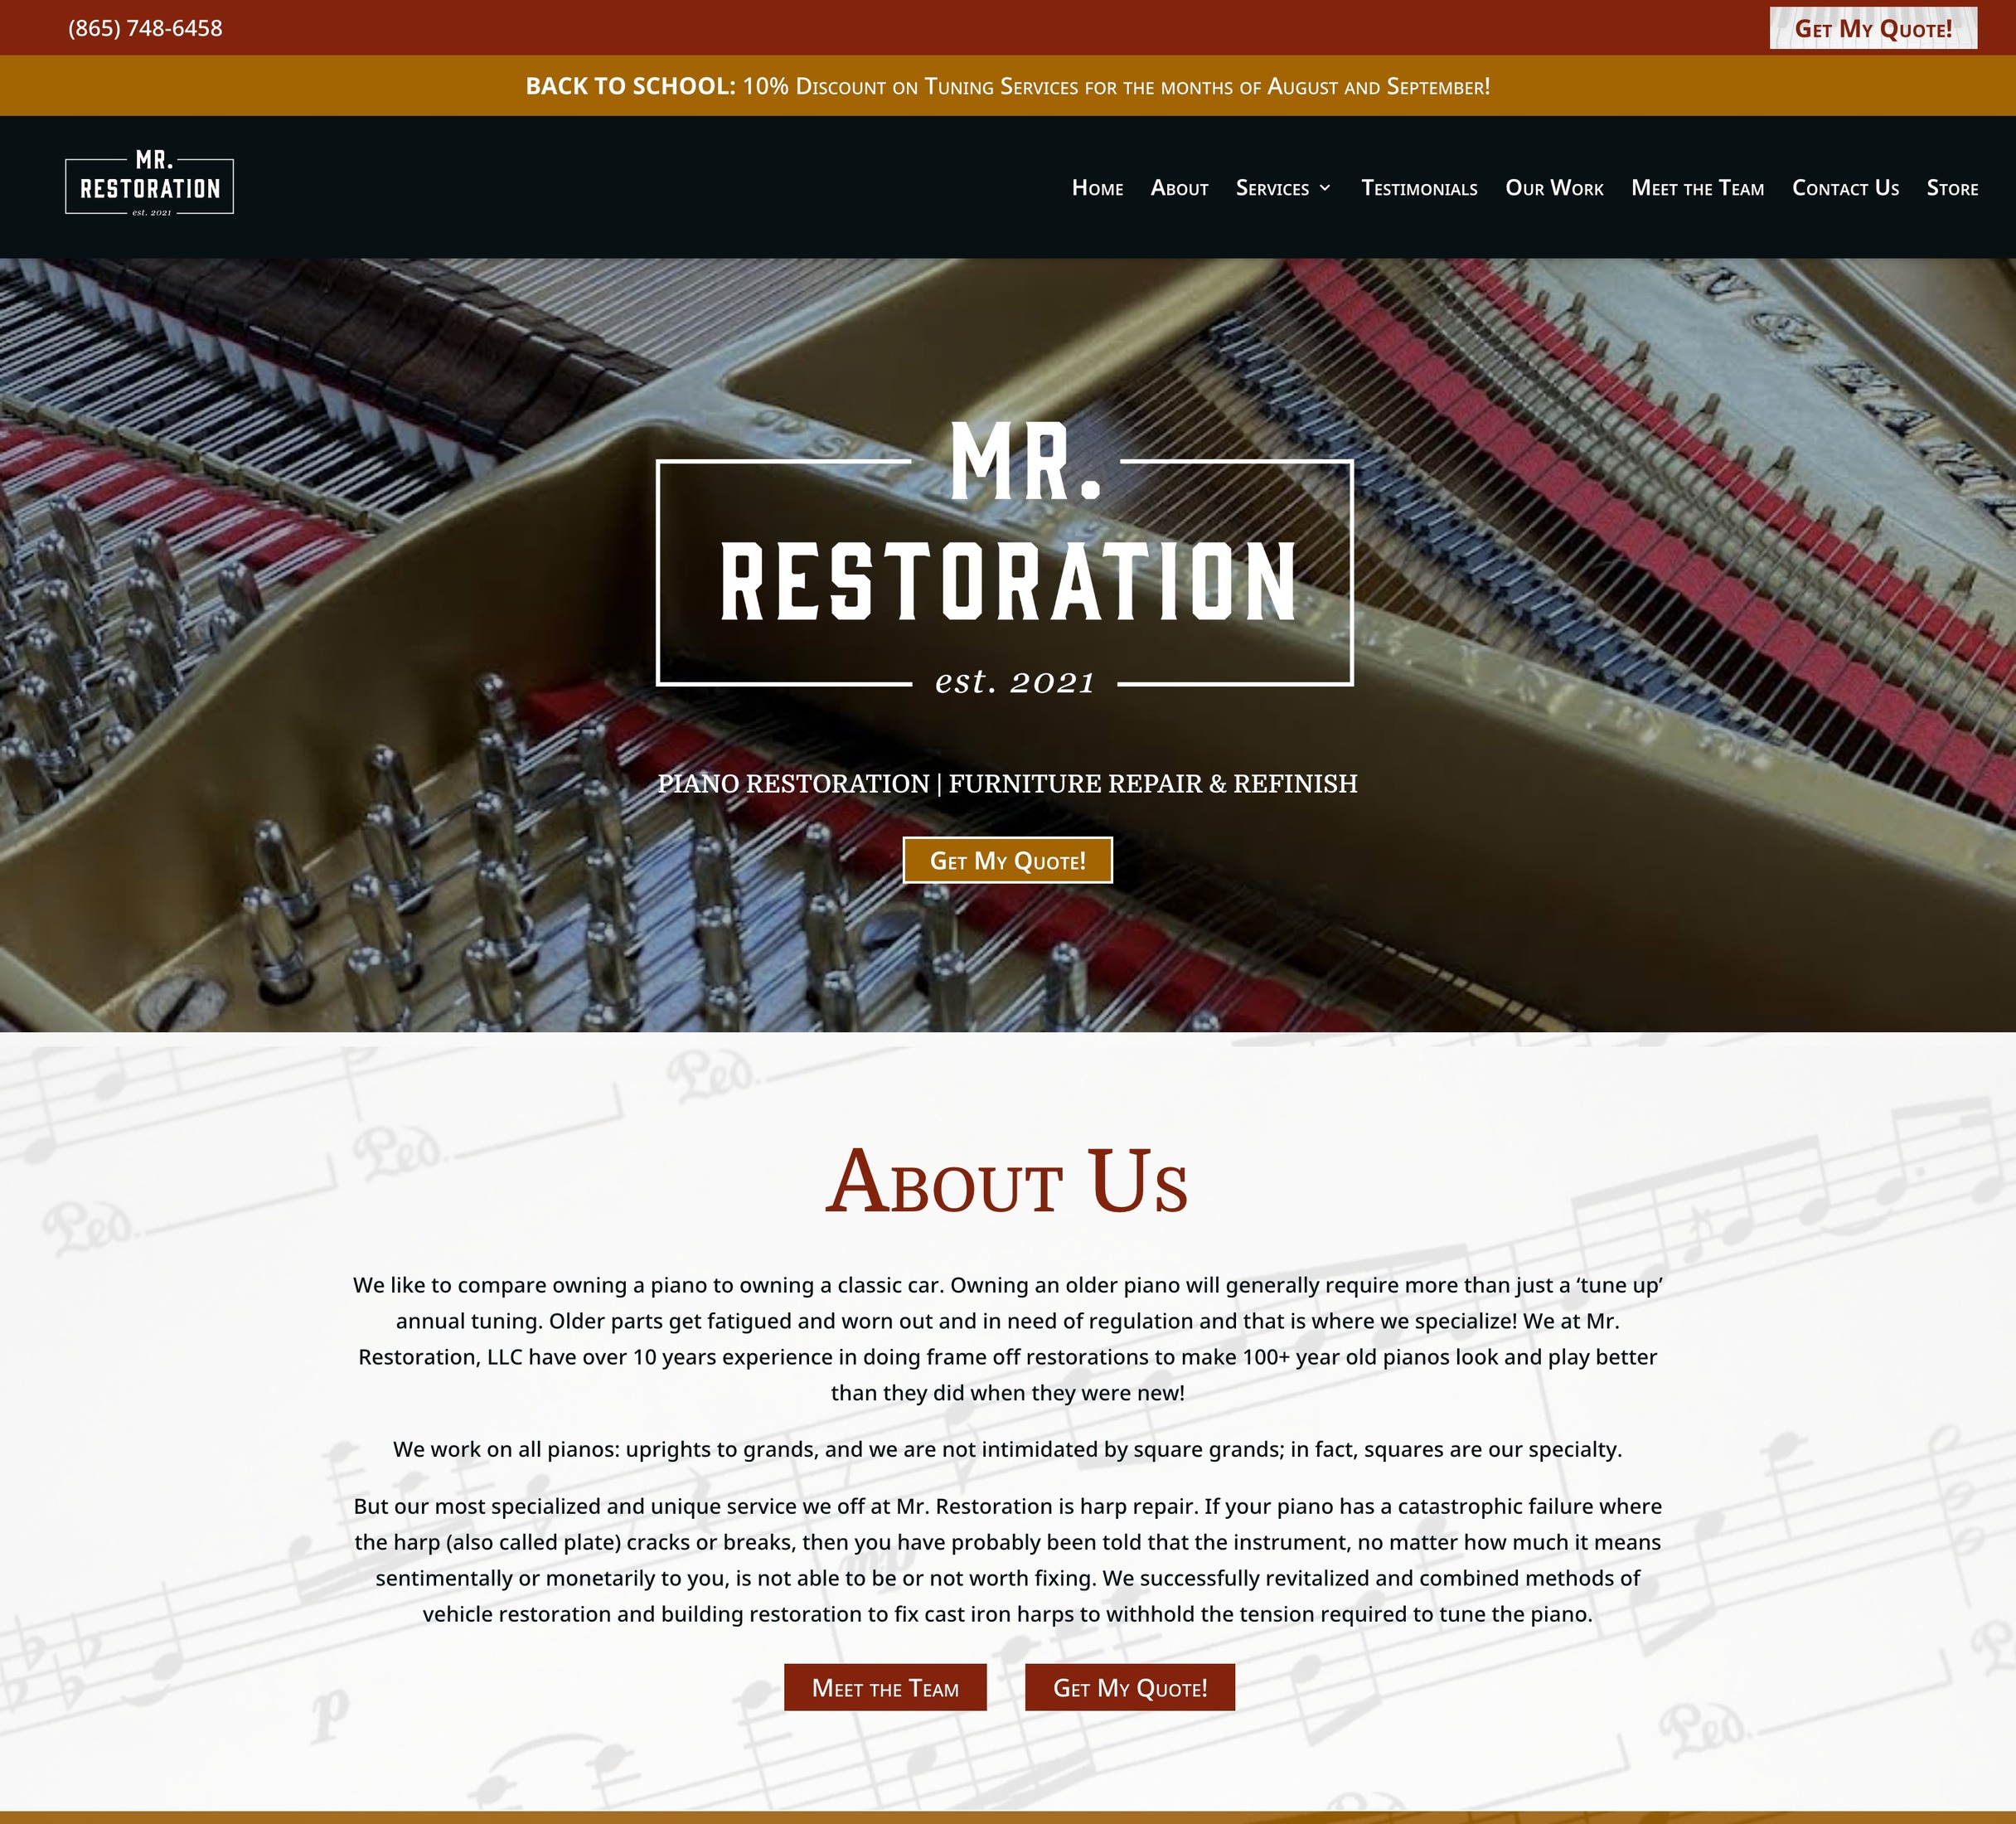 Mr. Restoration, LLC